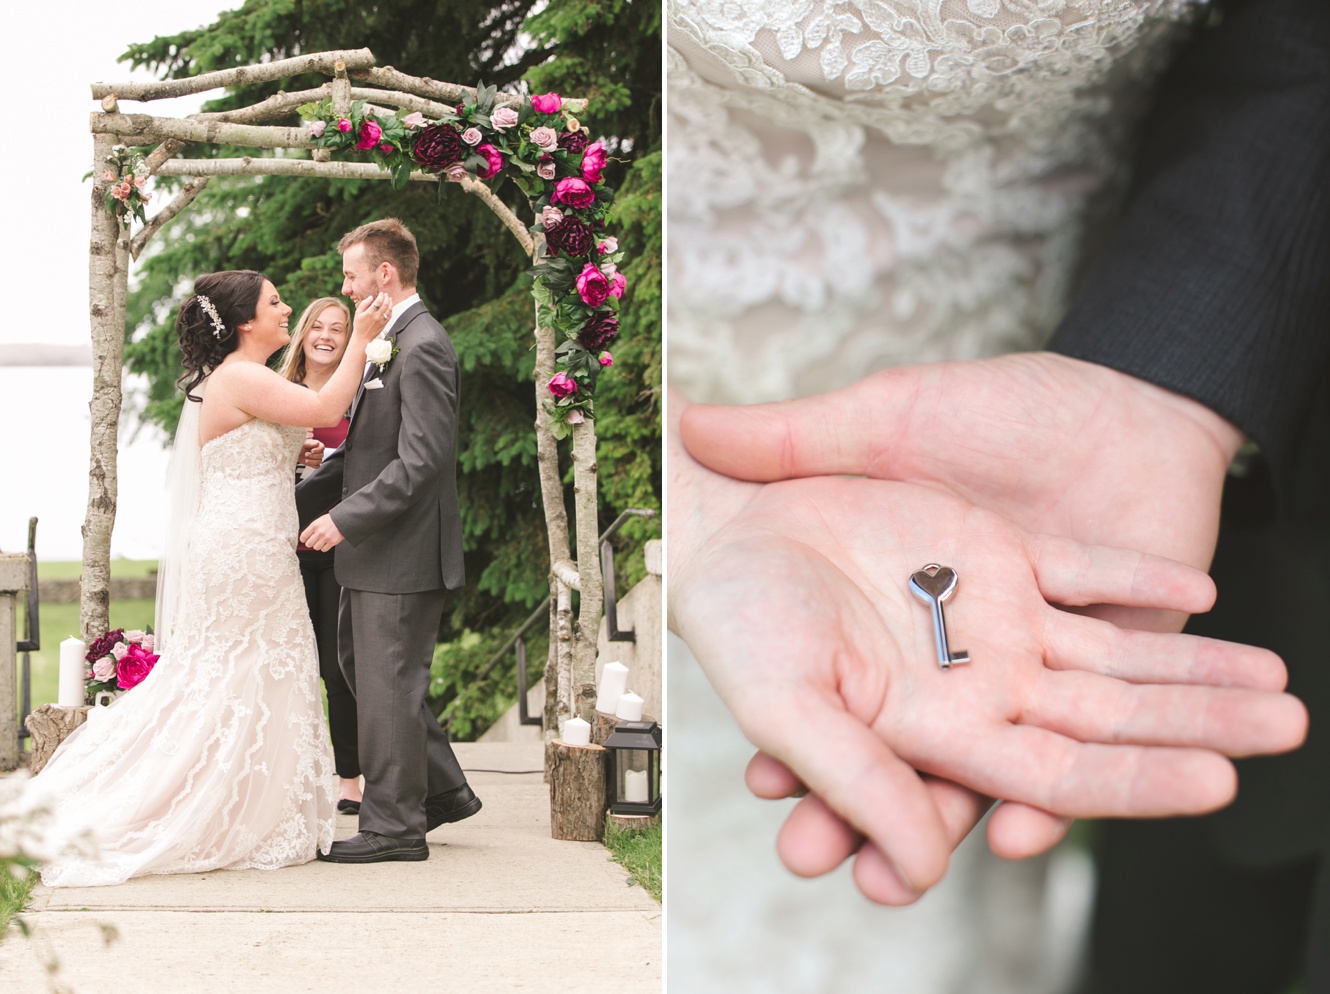 Lock and key wedding ceremony photo